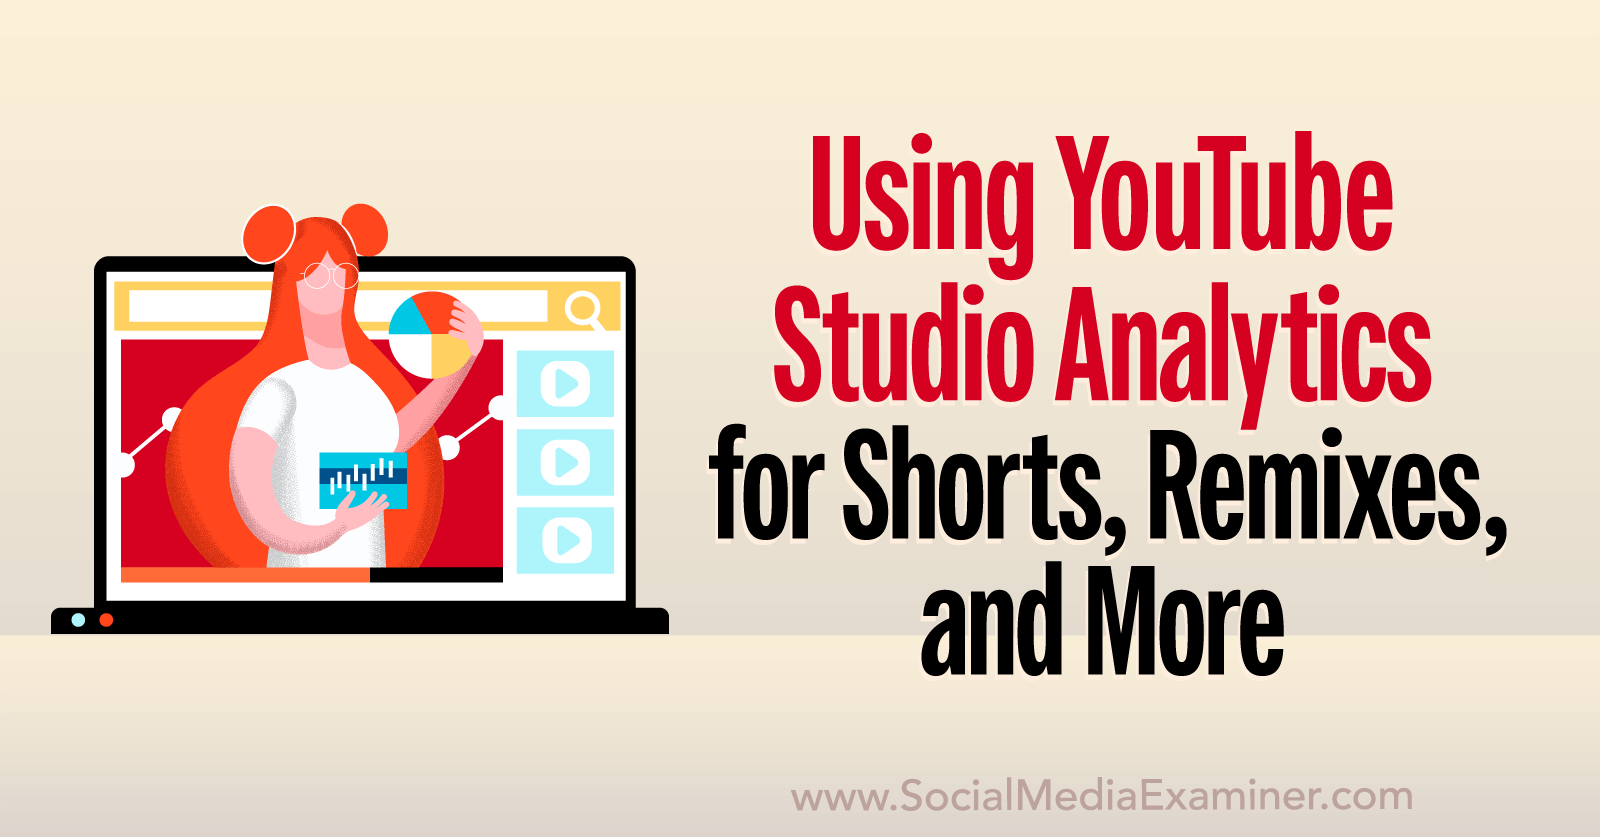 YouTube Studio Analytics: How to Analyze Shorts, Remixes, Videos, and More-Social Media Examiner